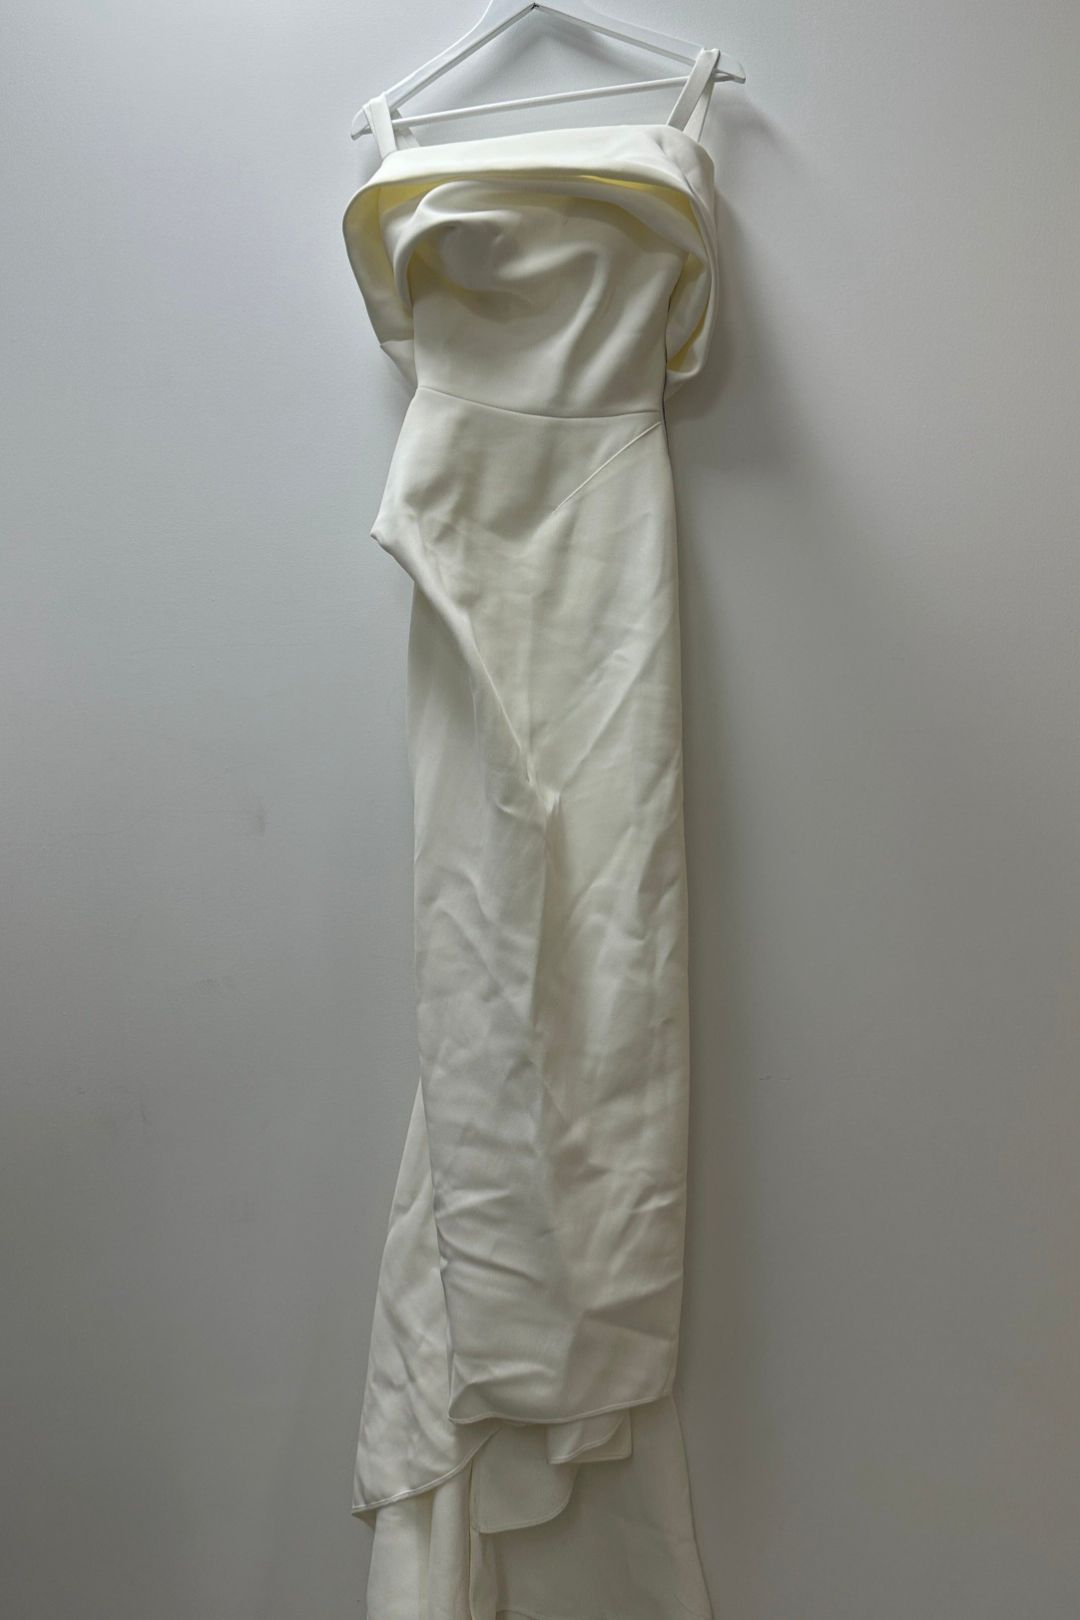 Maticevski The Allegro Gown in White